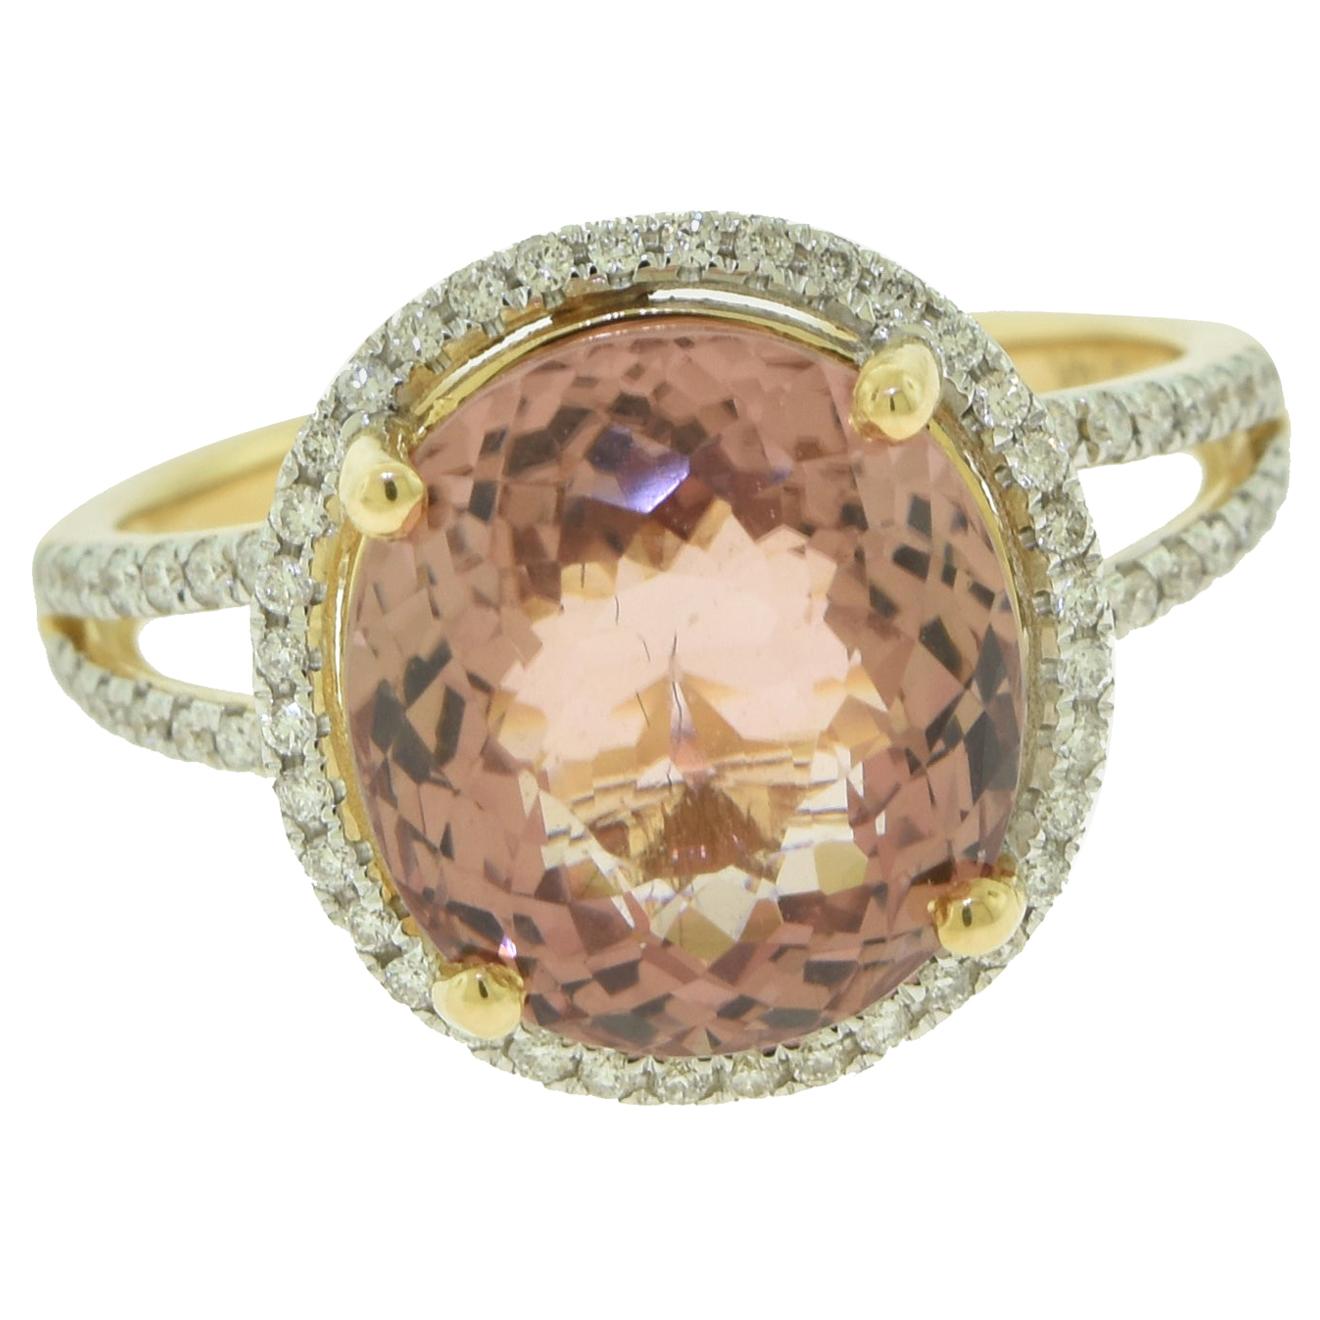 6.02 Carat Tourmaline and Diamond Engagement Ring